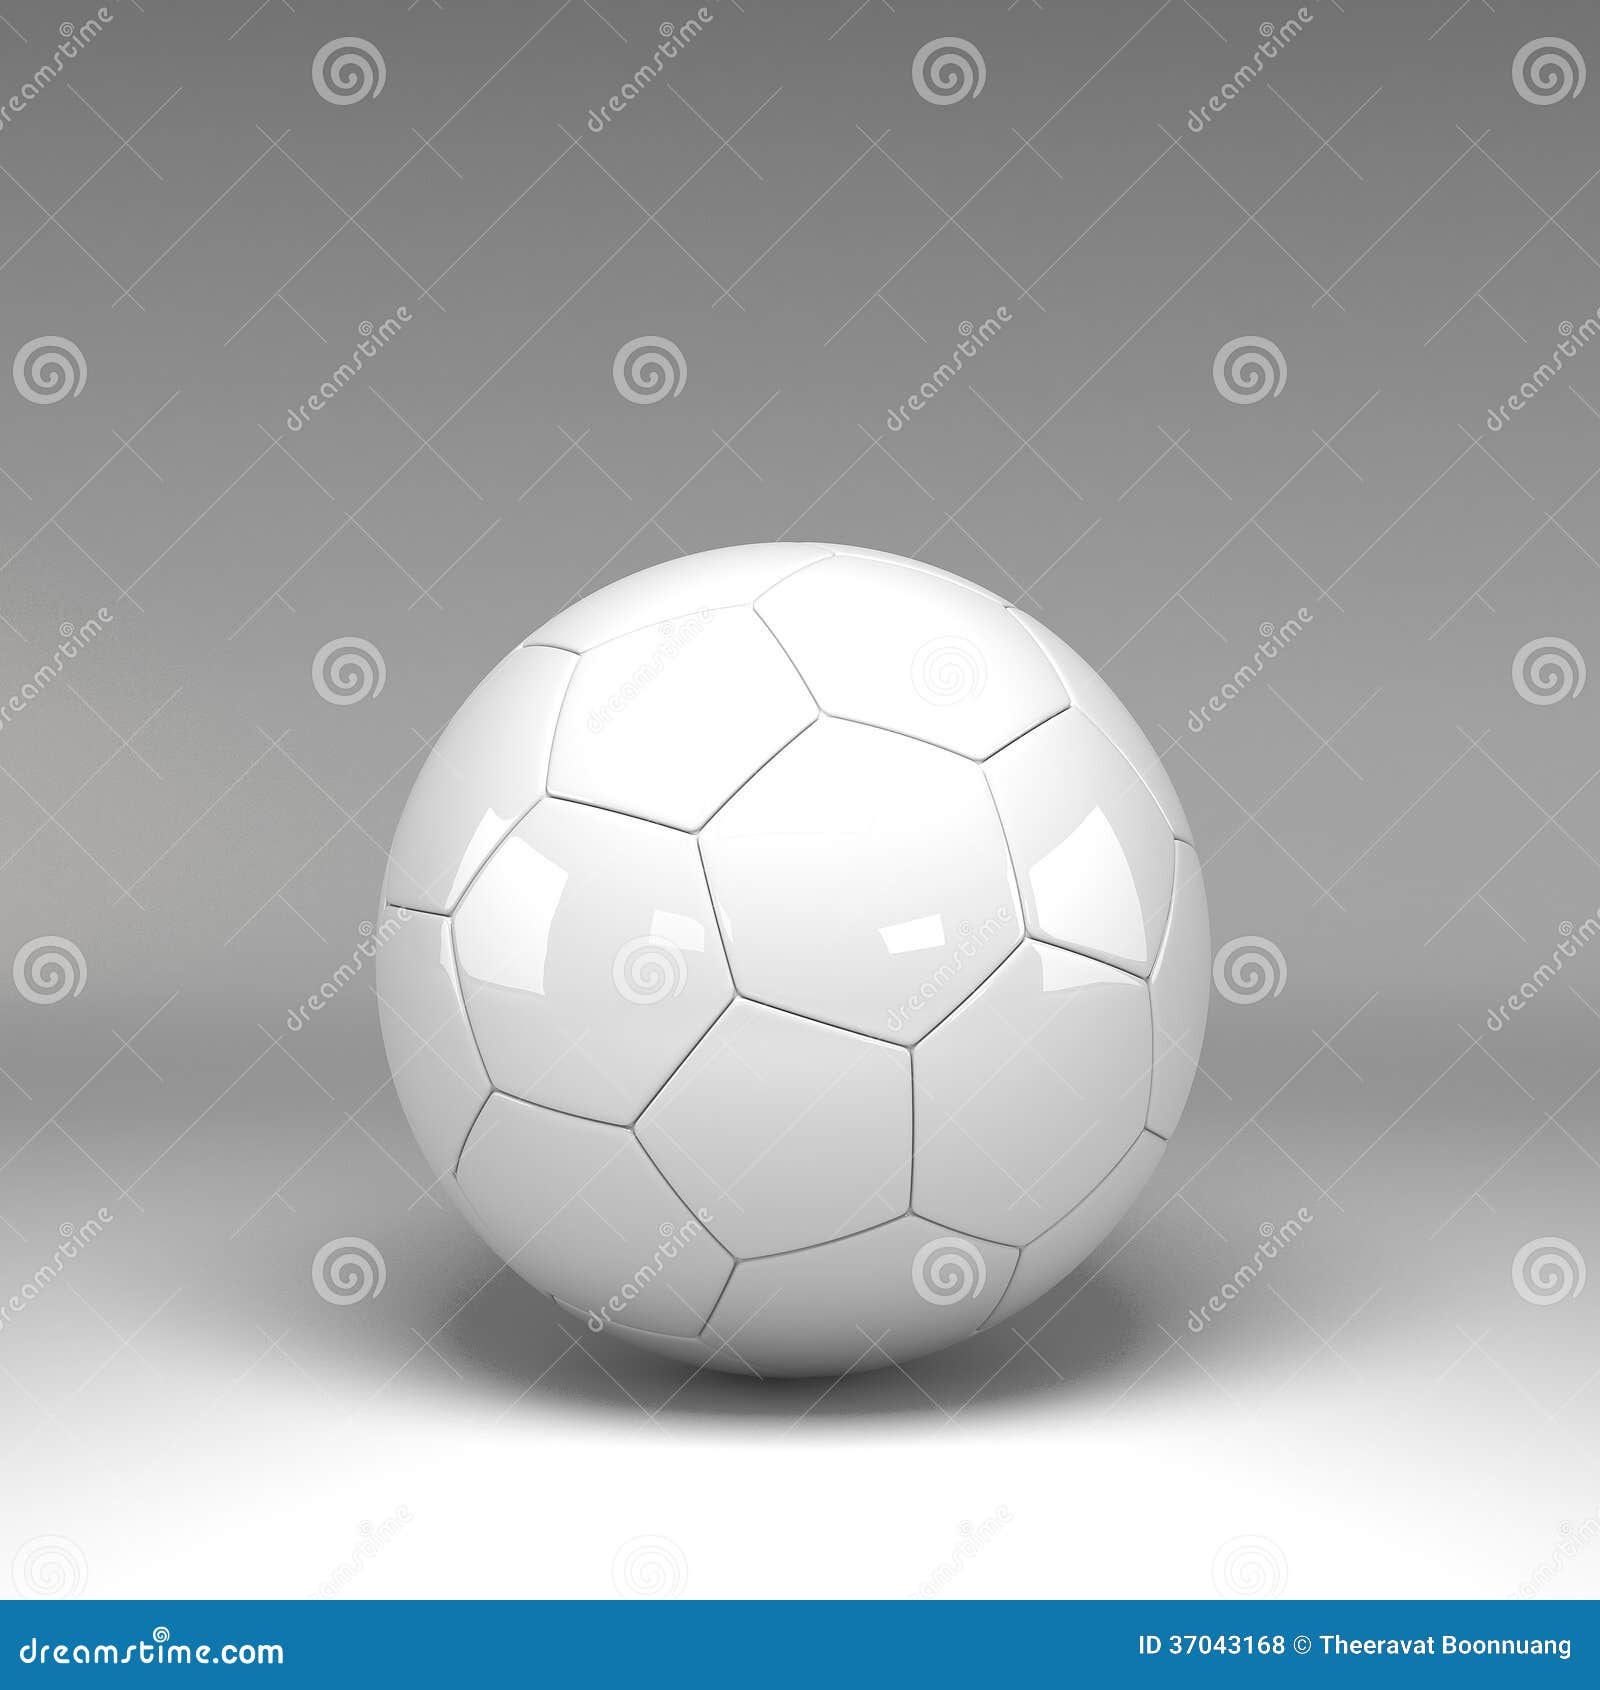 3d Football, Soccer Ball stock illustration. Illustration of classic ...